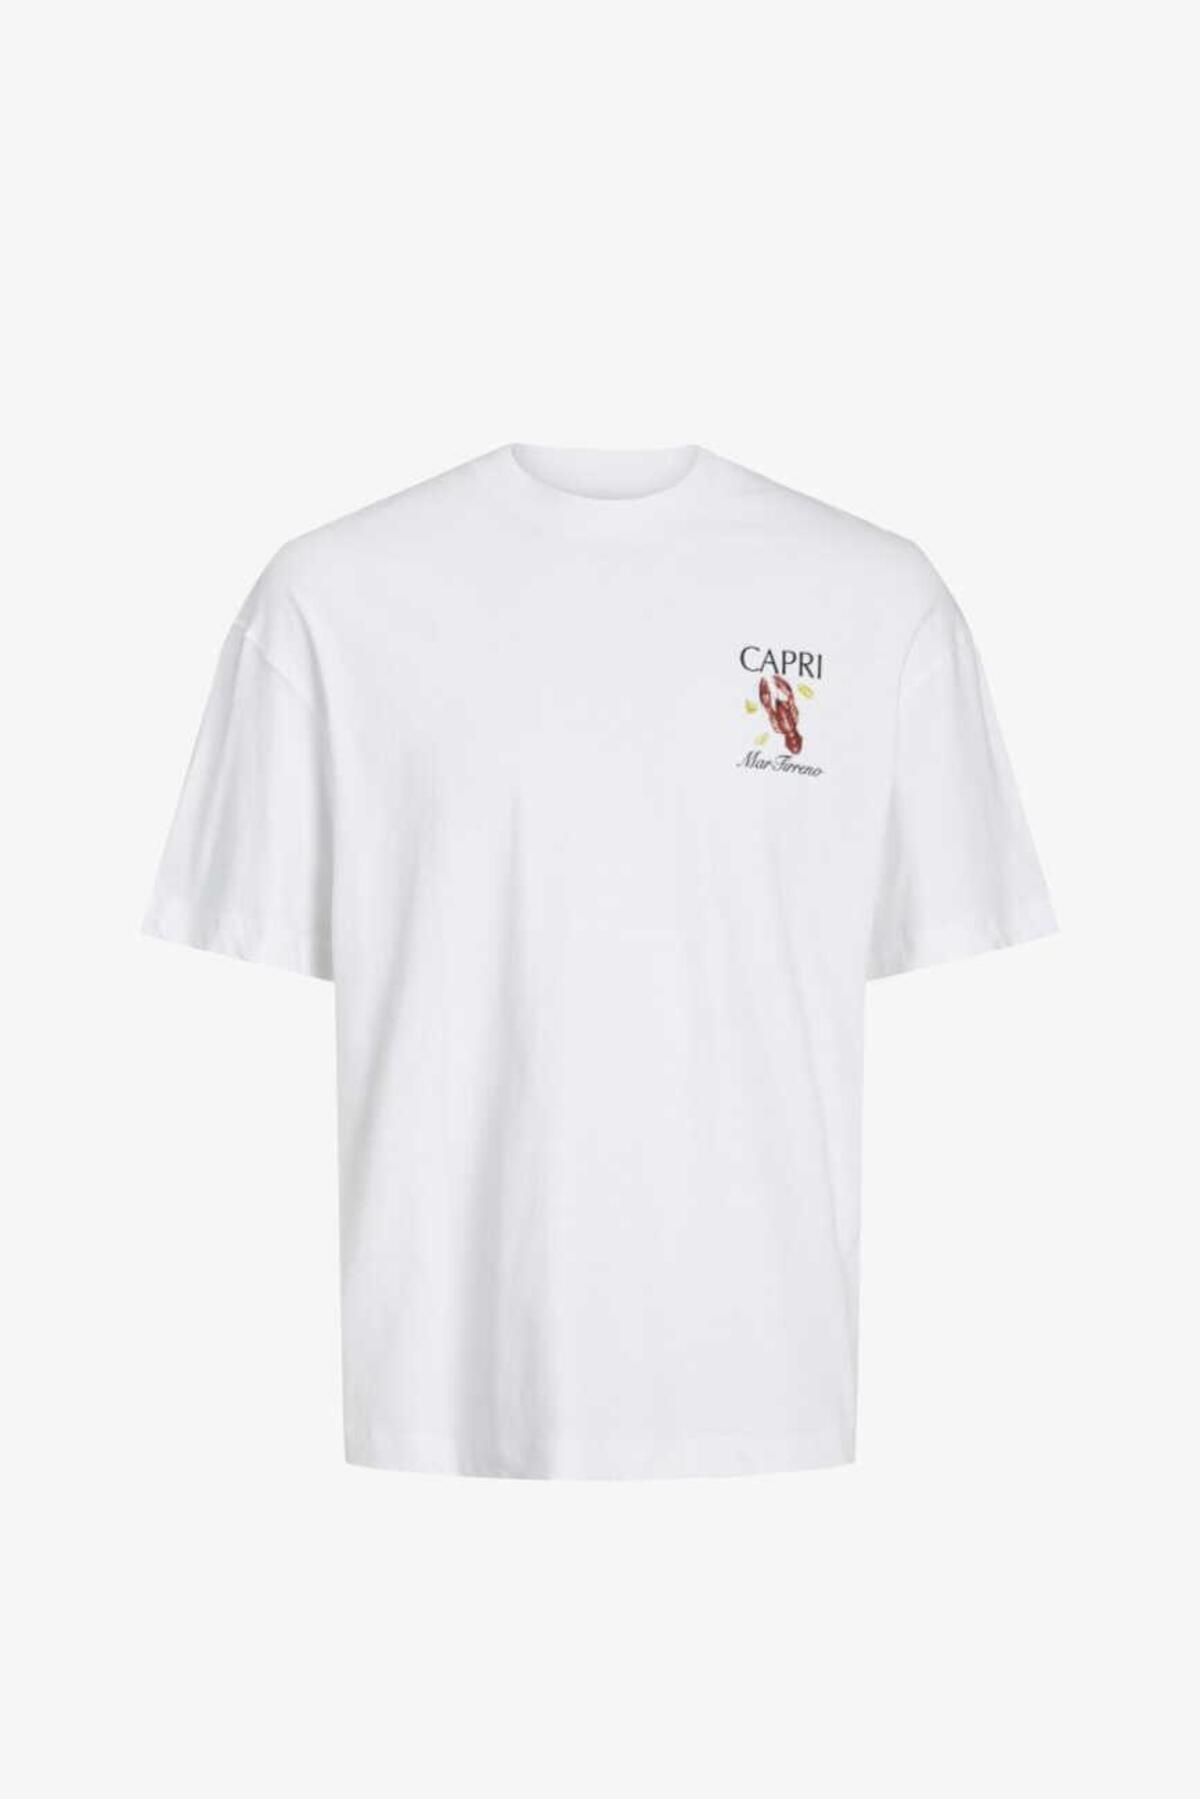 Jack & Jones Jormontecarlo Watercolor Tee Ss Crew Sn Beyaz Erkek T-shirt 12241610-brigh